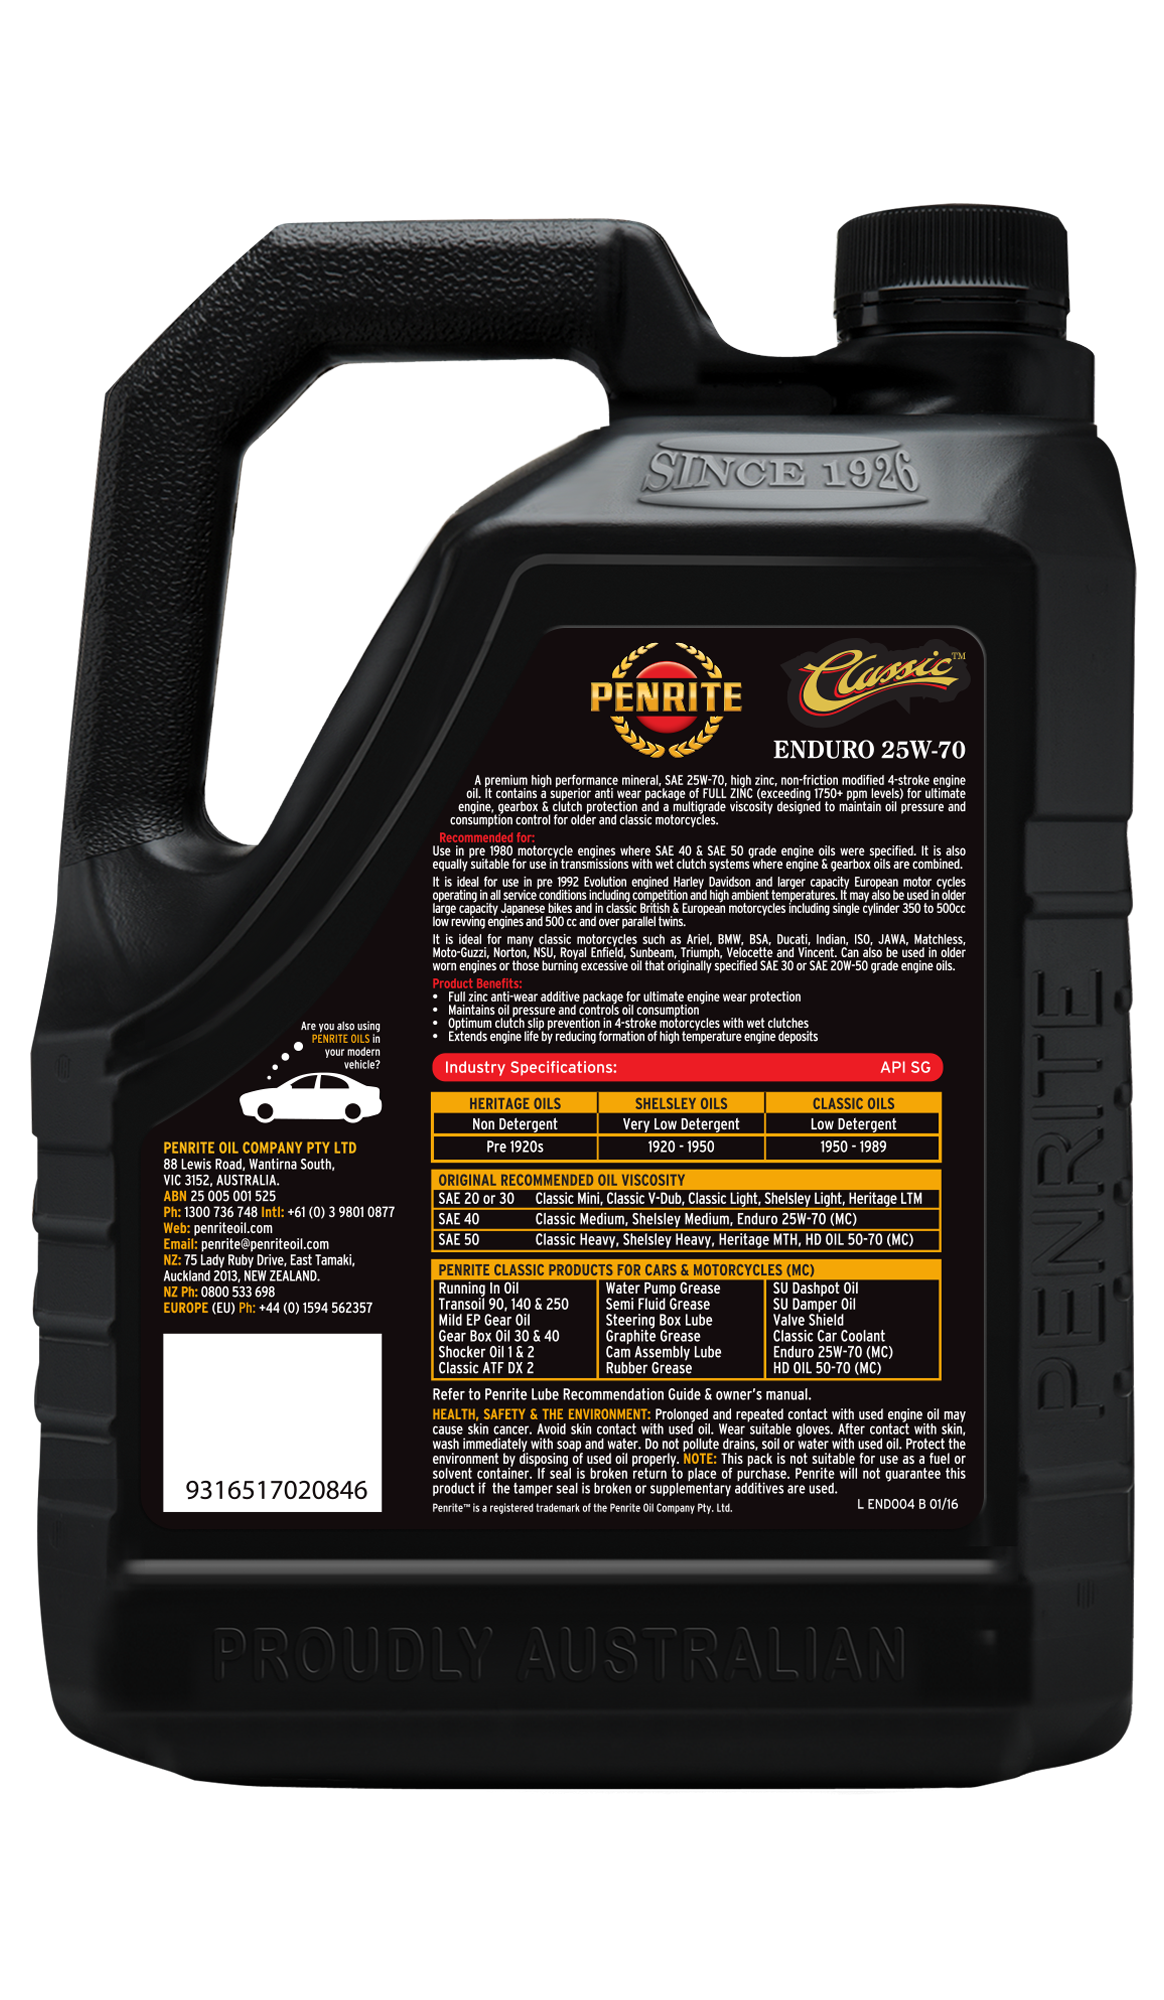 Enduro HD 25W-70 (Mineral) 4L - Penrite 4 X 5 Litre (Carton Only) | Universal Auto Spares